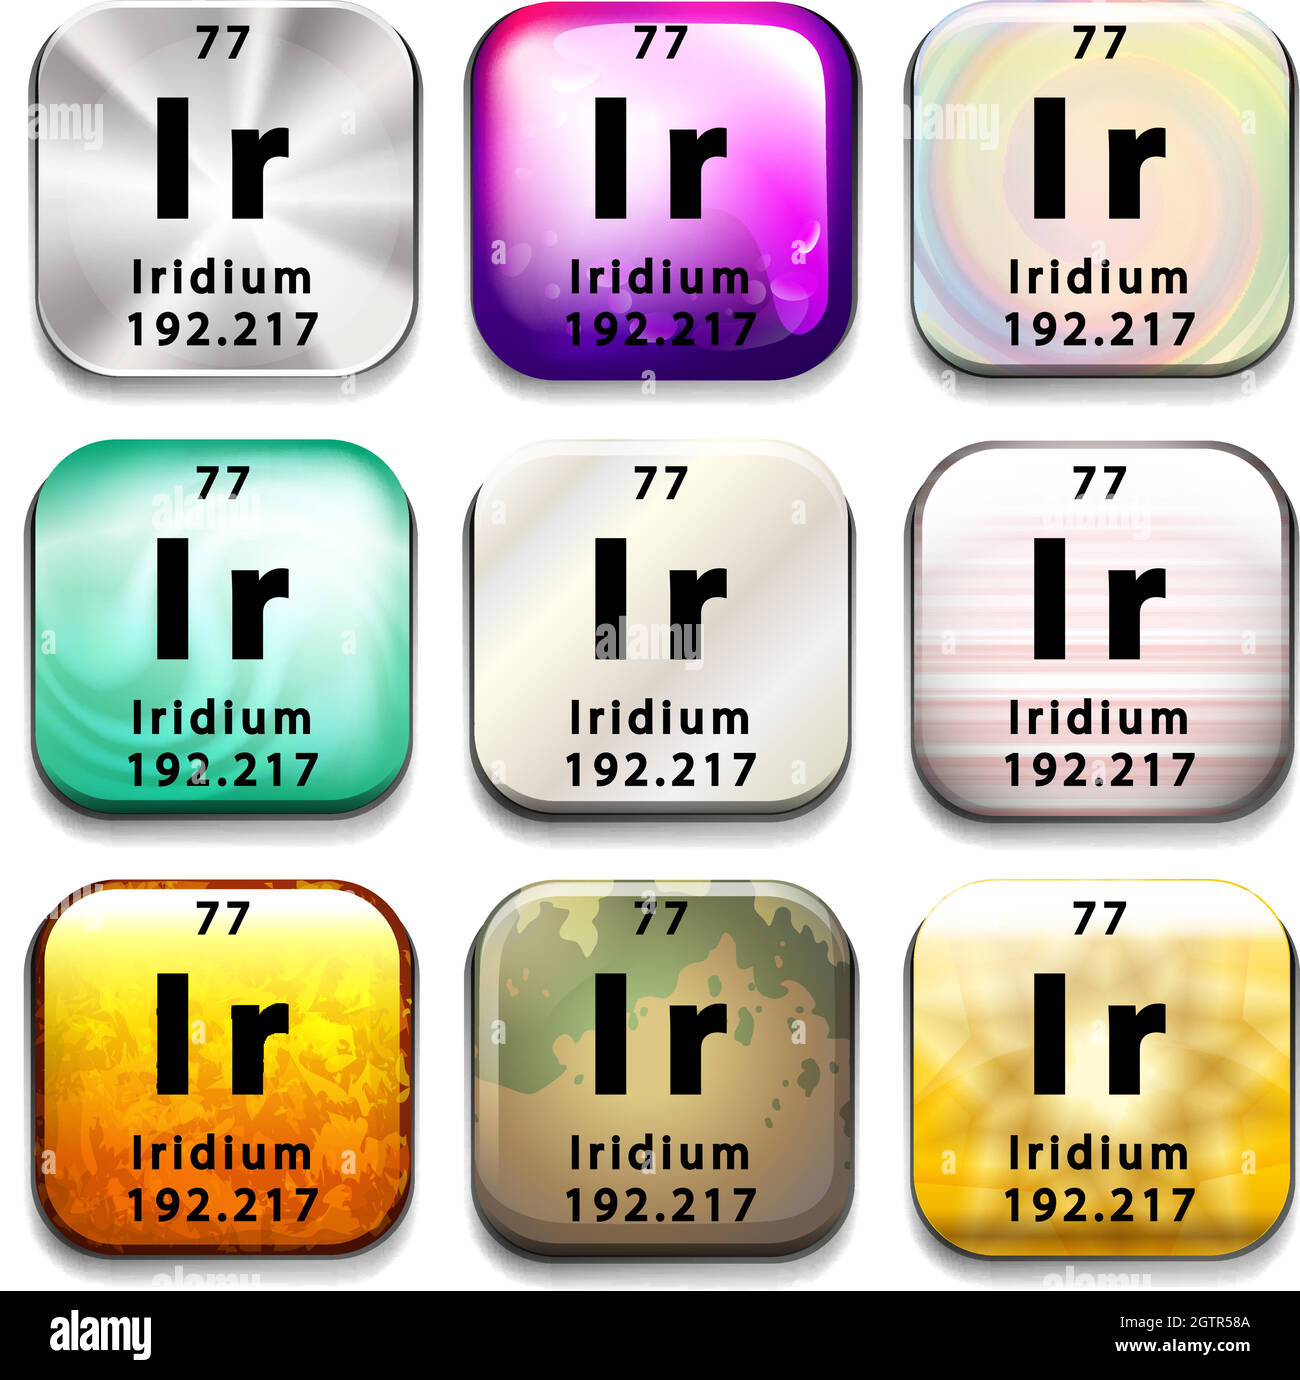 A button showing the element Iridium Stock Vector